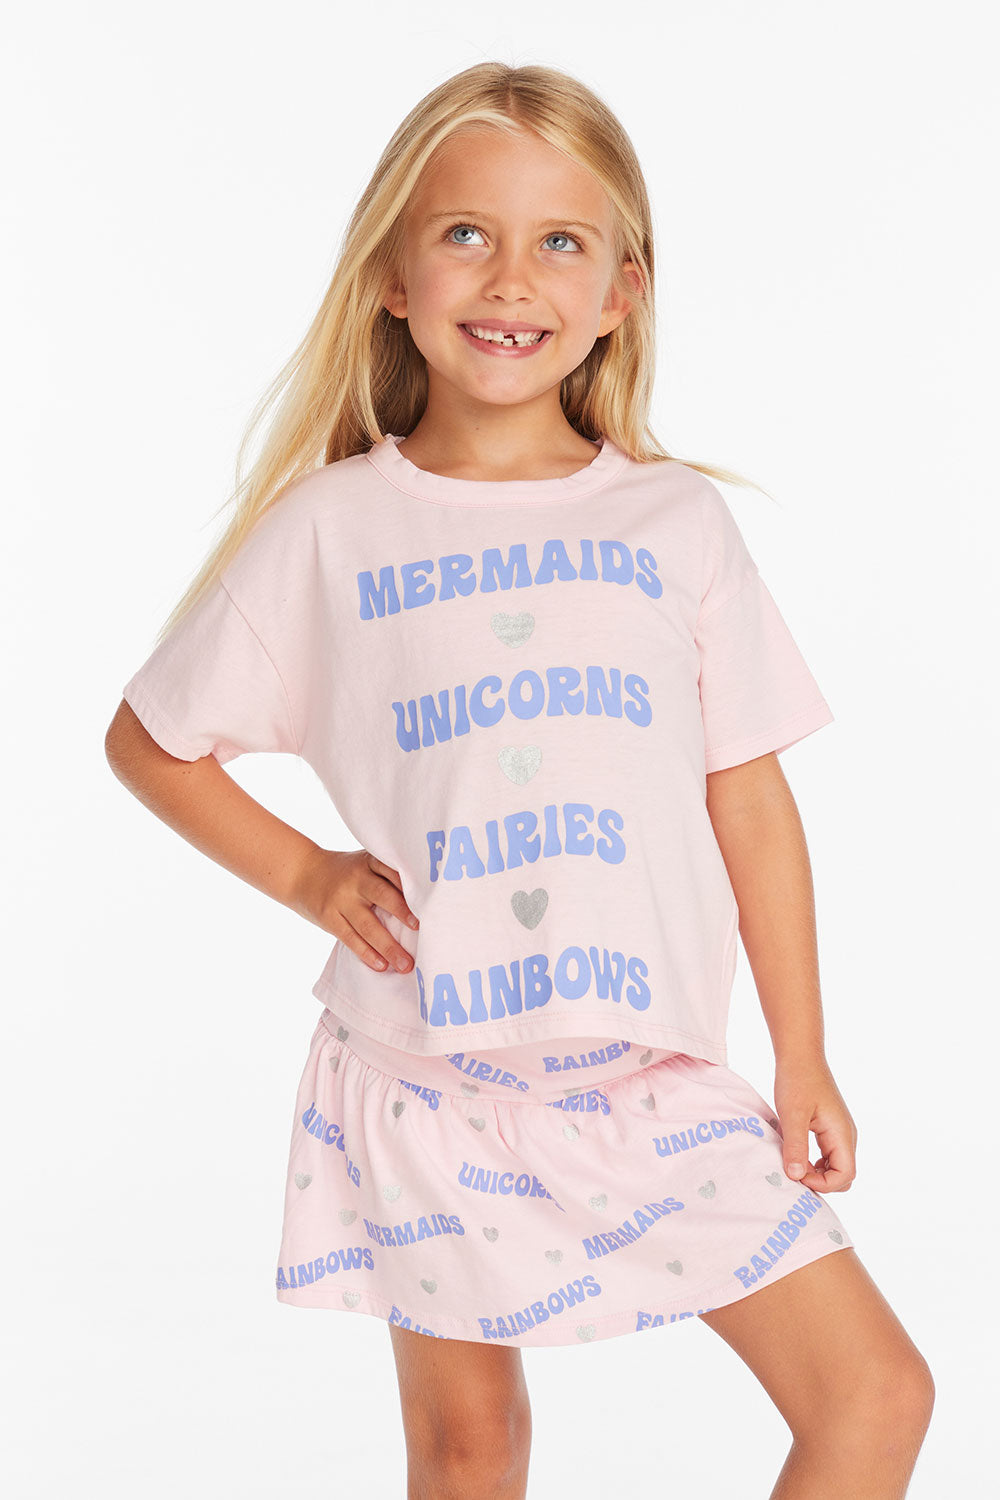 Mermaid & Friends Girls Tee Girls chaserbrand